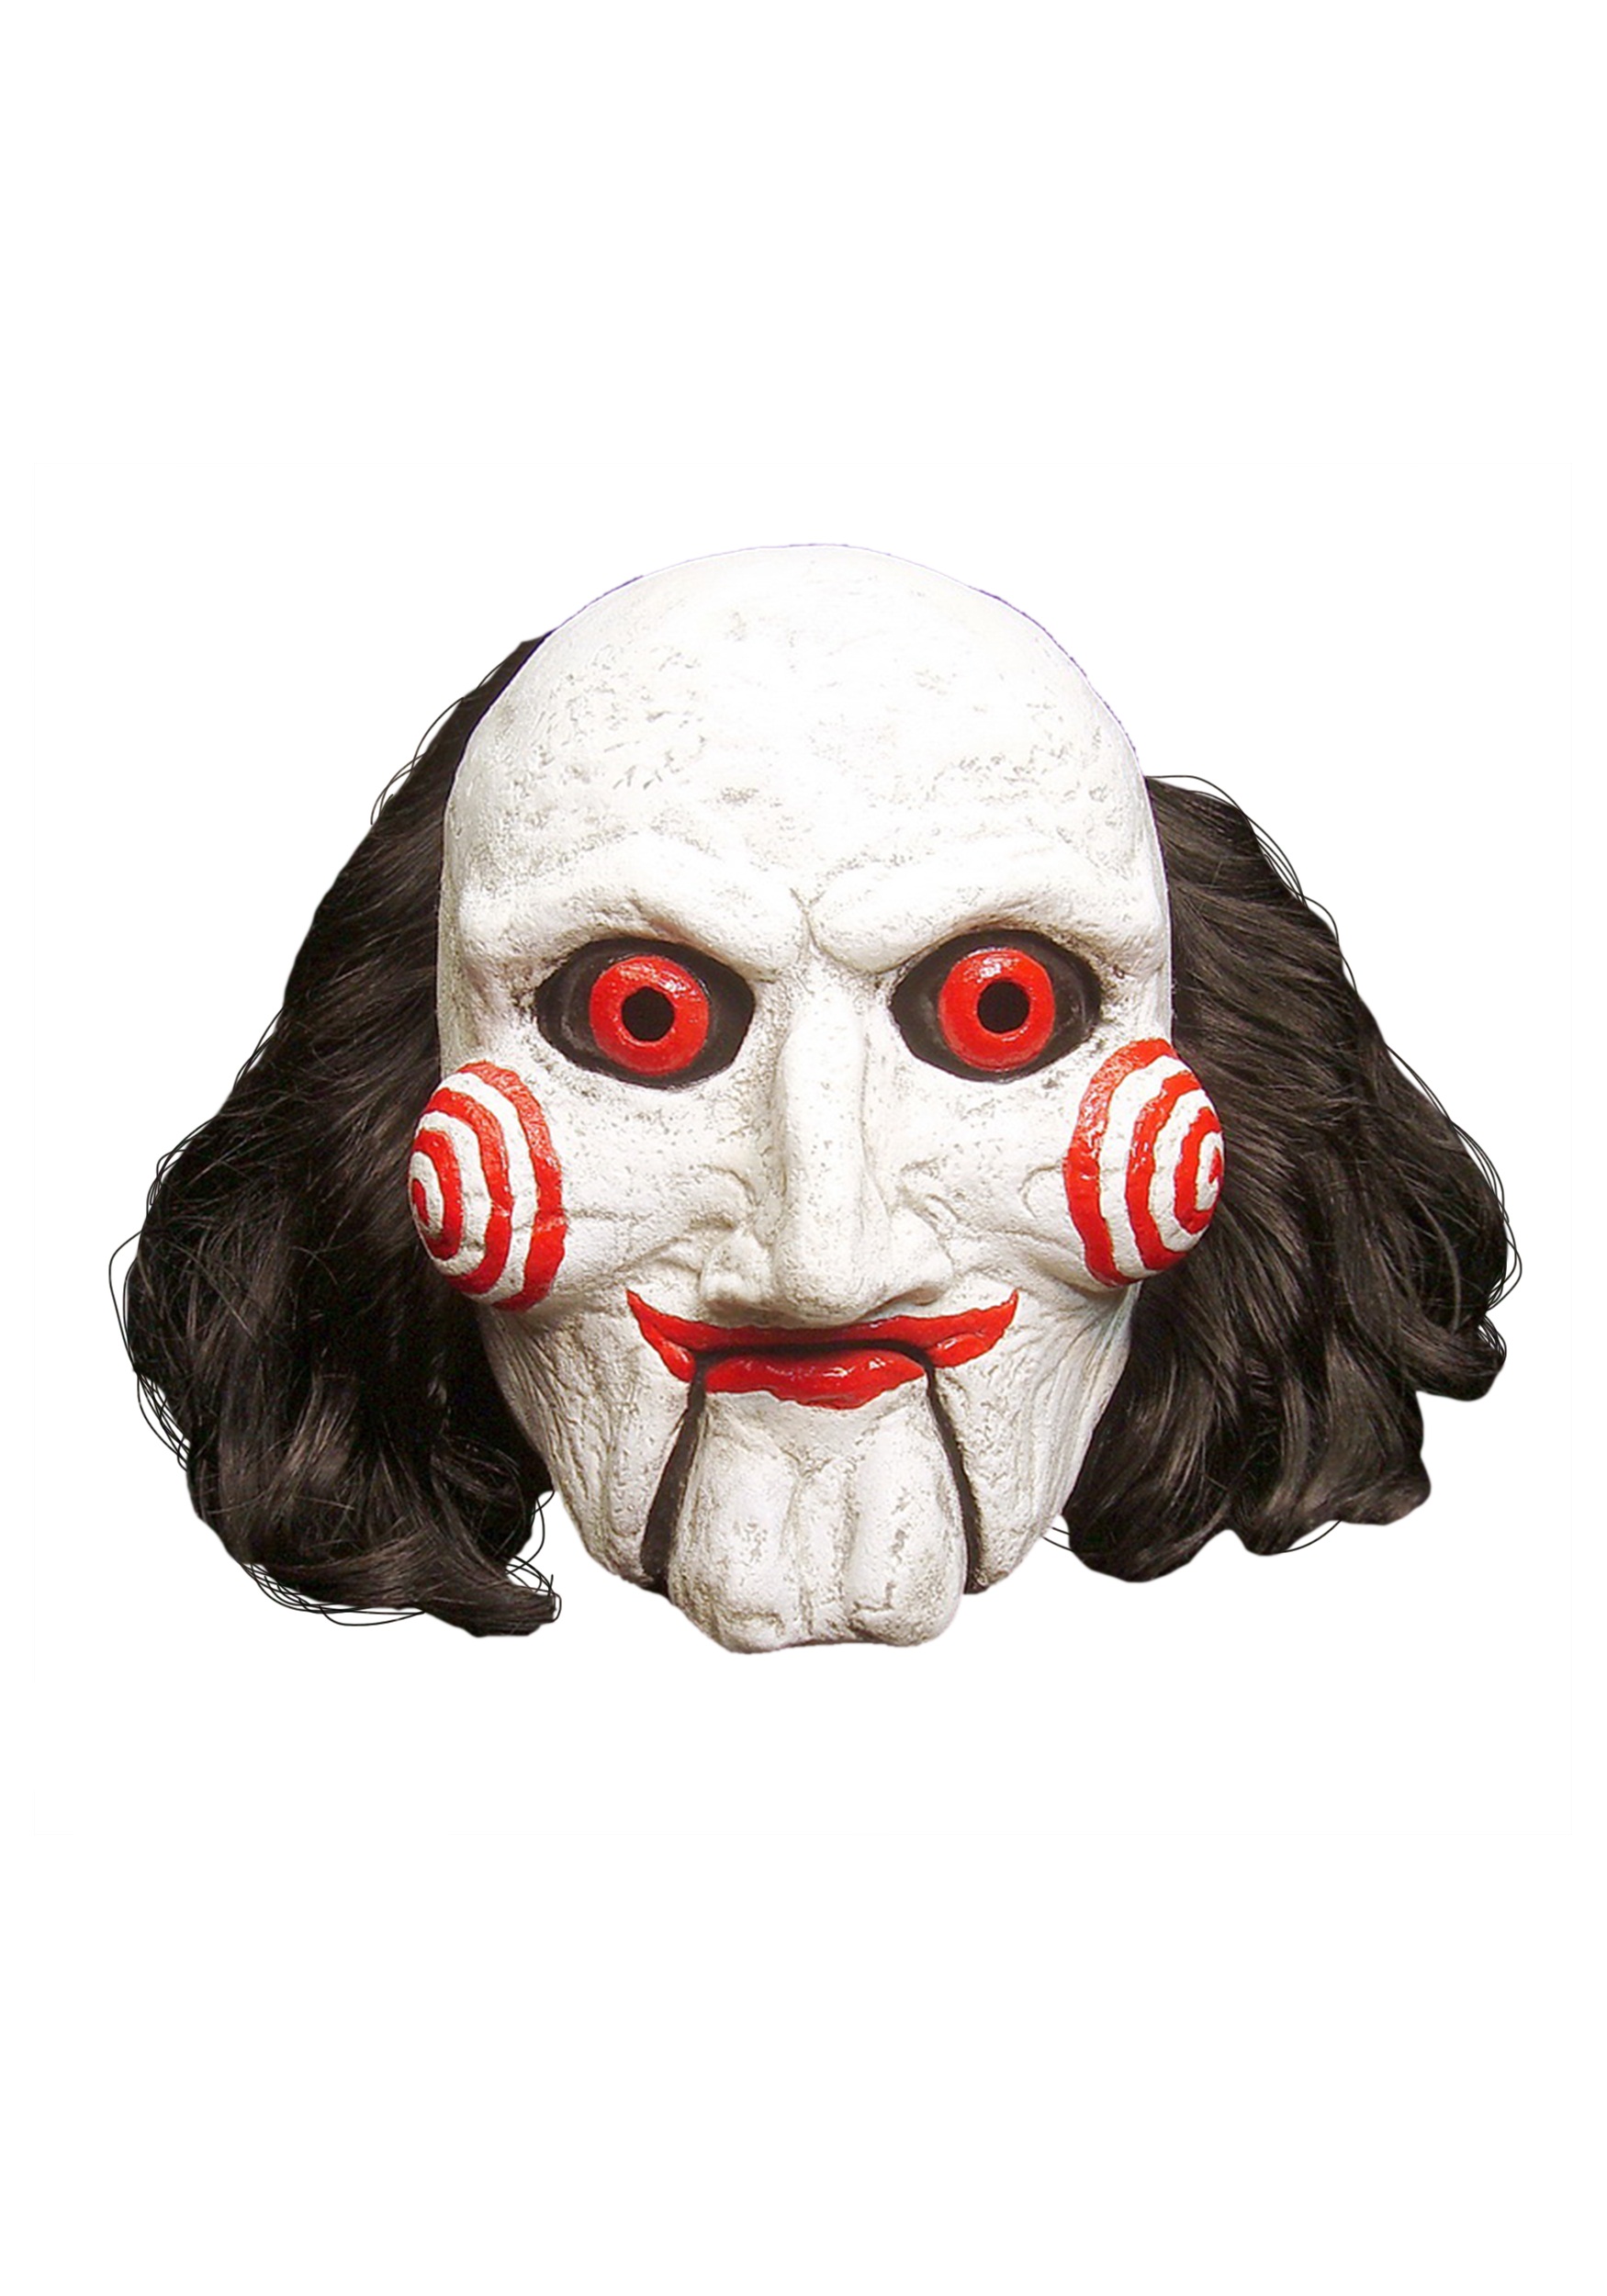 creepy masks from movies